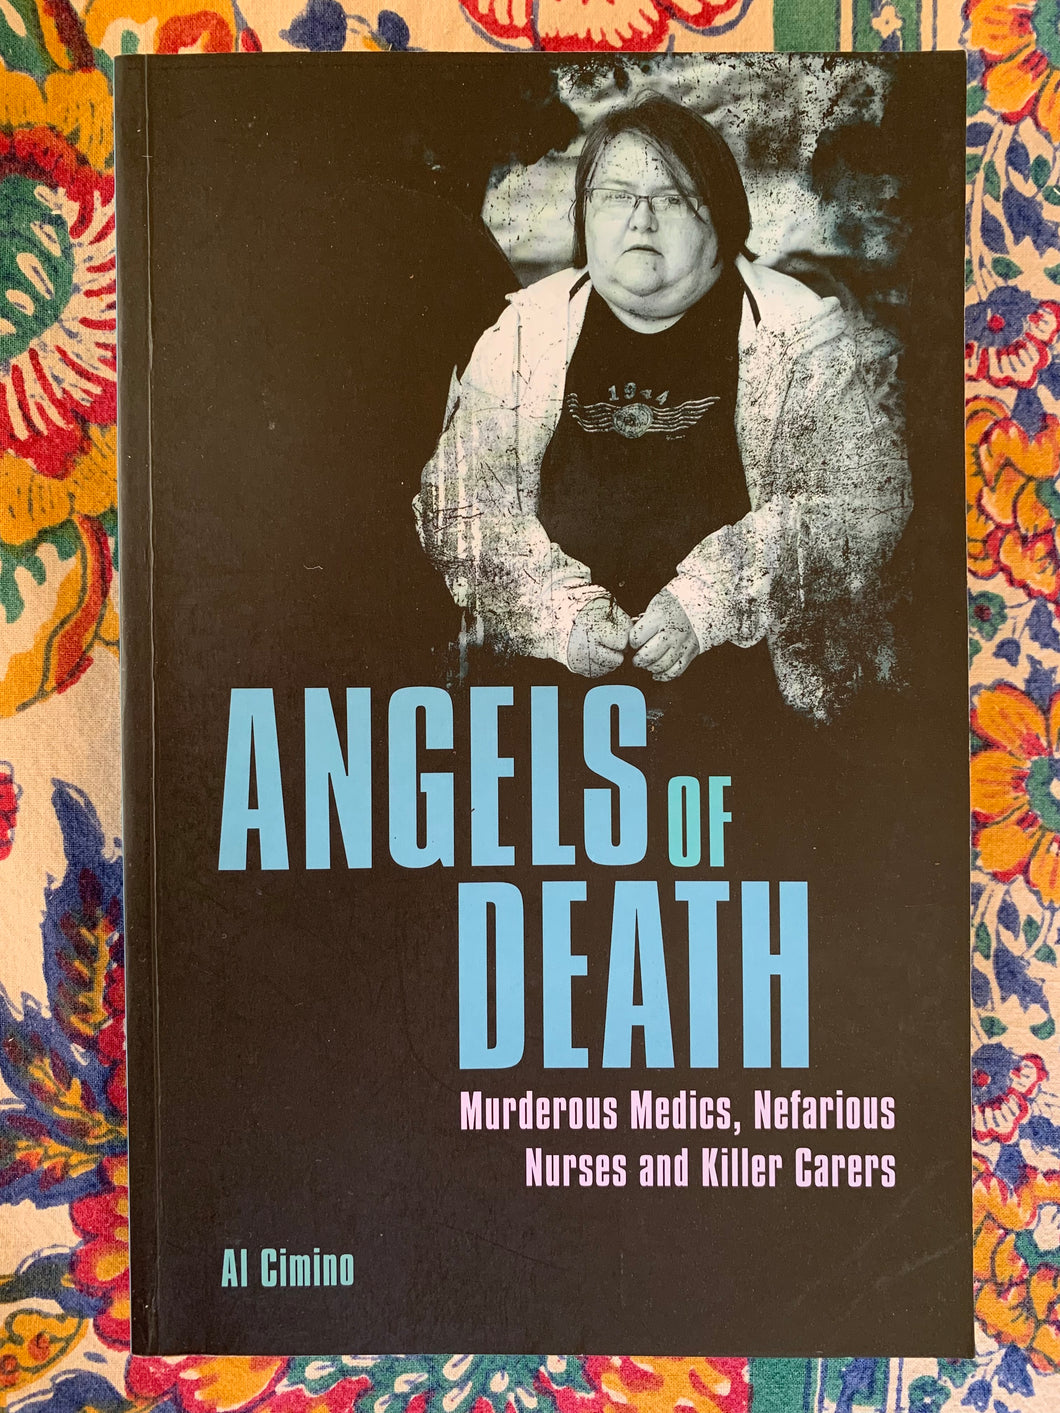 Angels of Death: Murderous Medics, Nefarious Nurses and Killer Carers